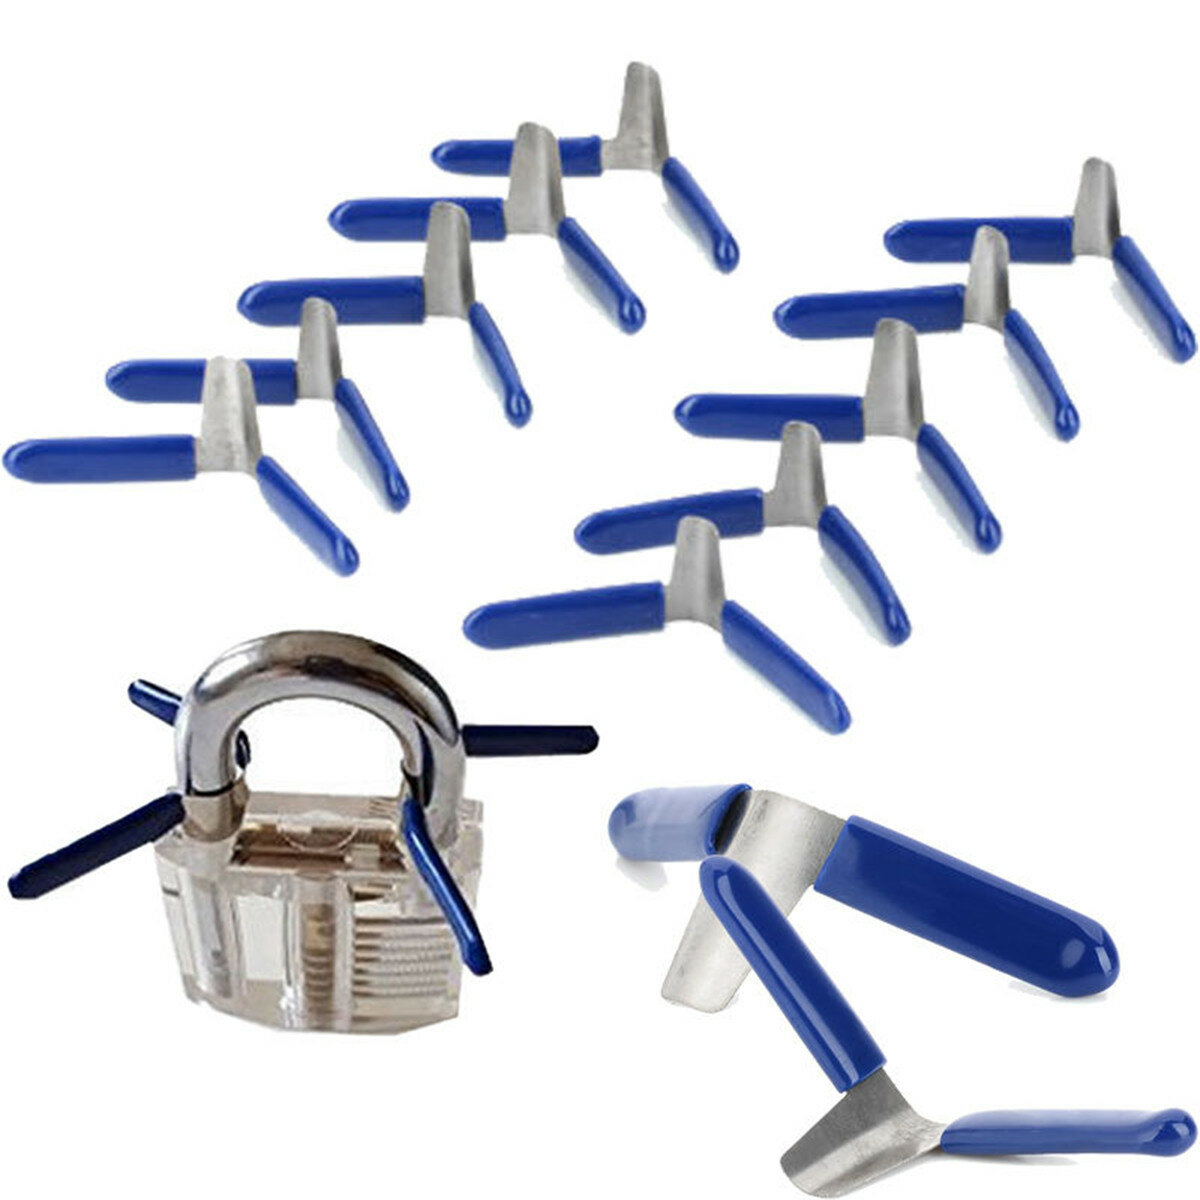 10 stks hangslot shim picks set lock pick lockpicking opener accessoires tool gemakkelijk